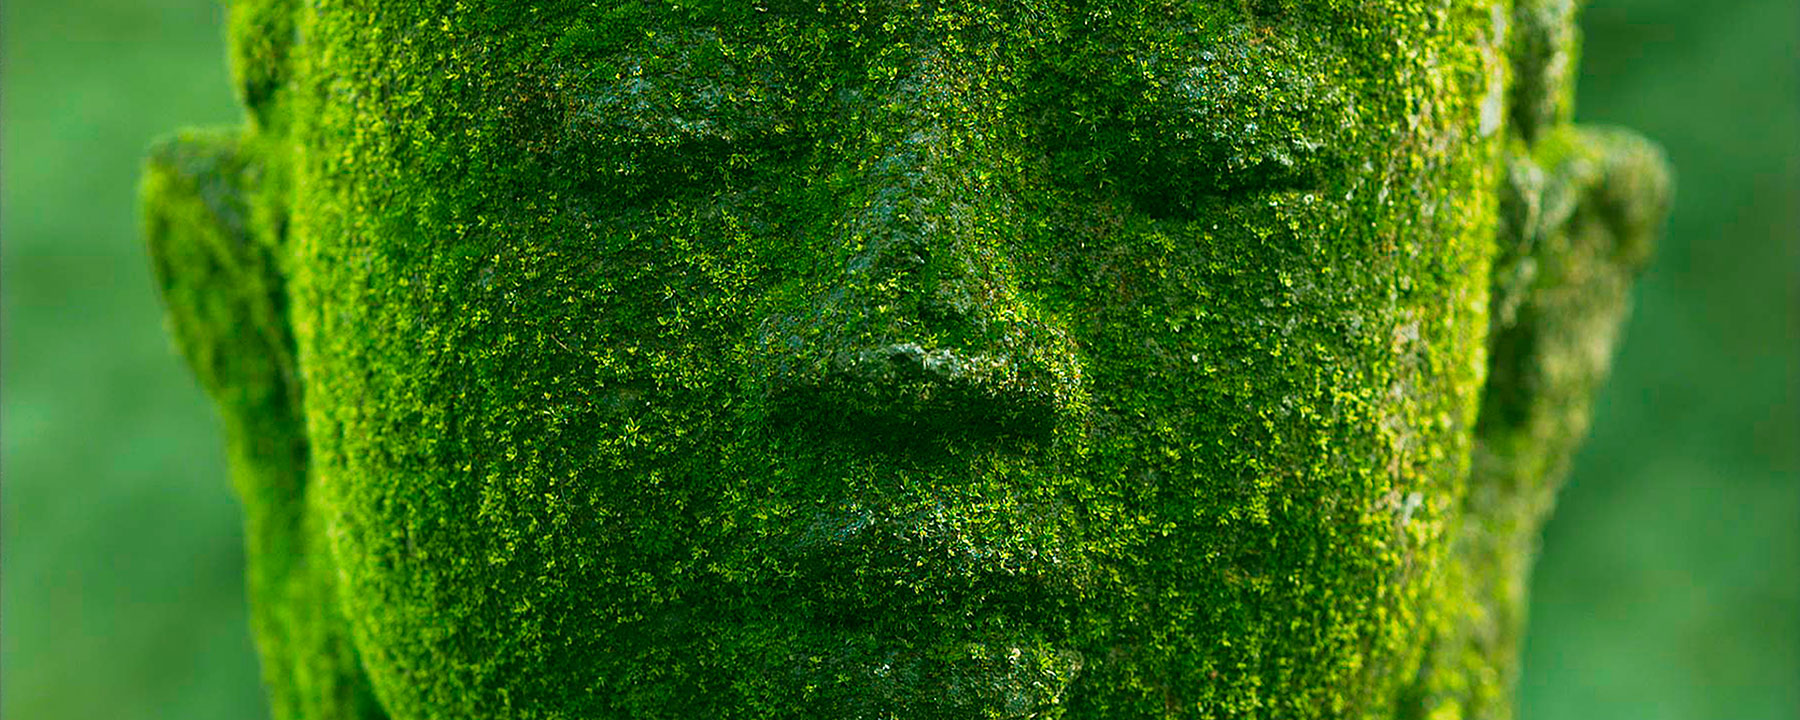 Groene Boeddha tegen groene achtergrond